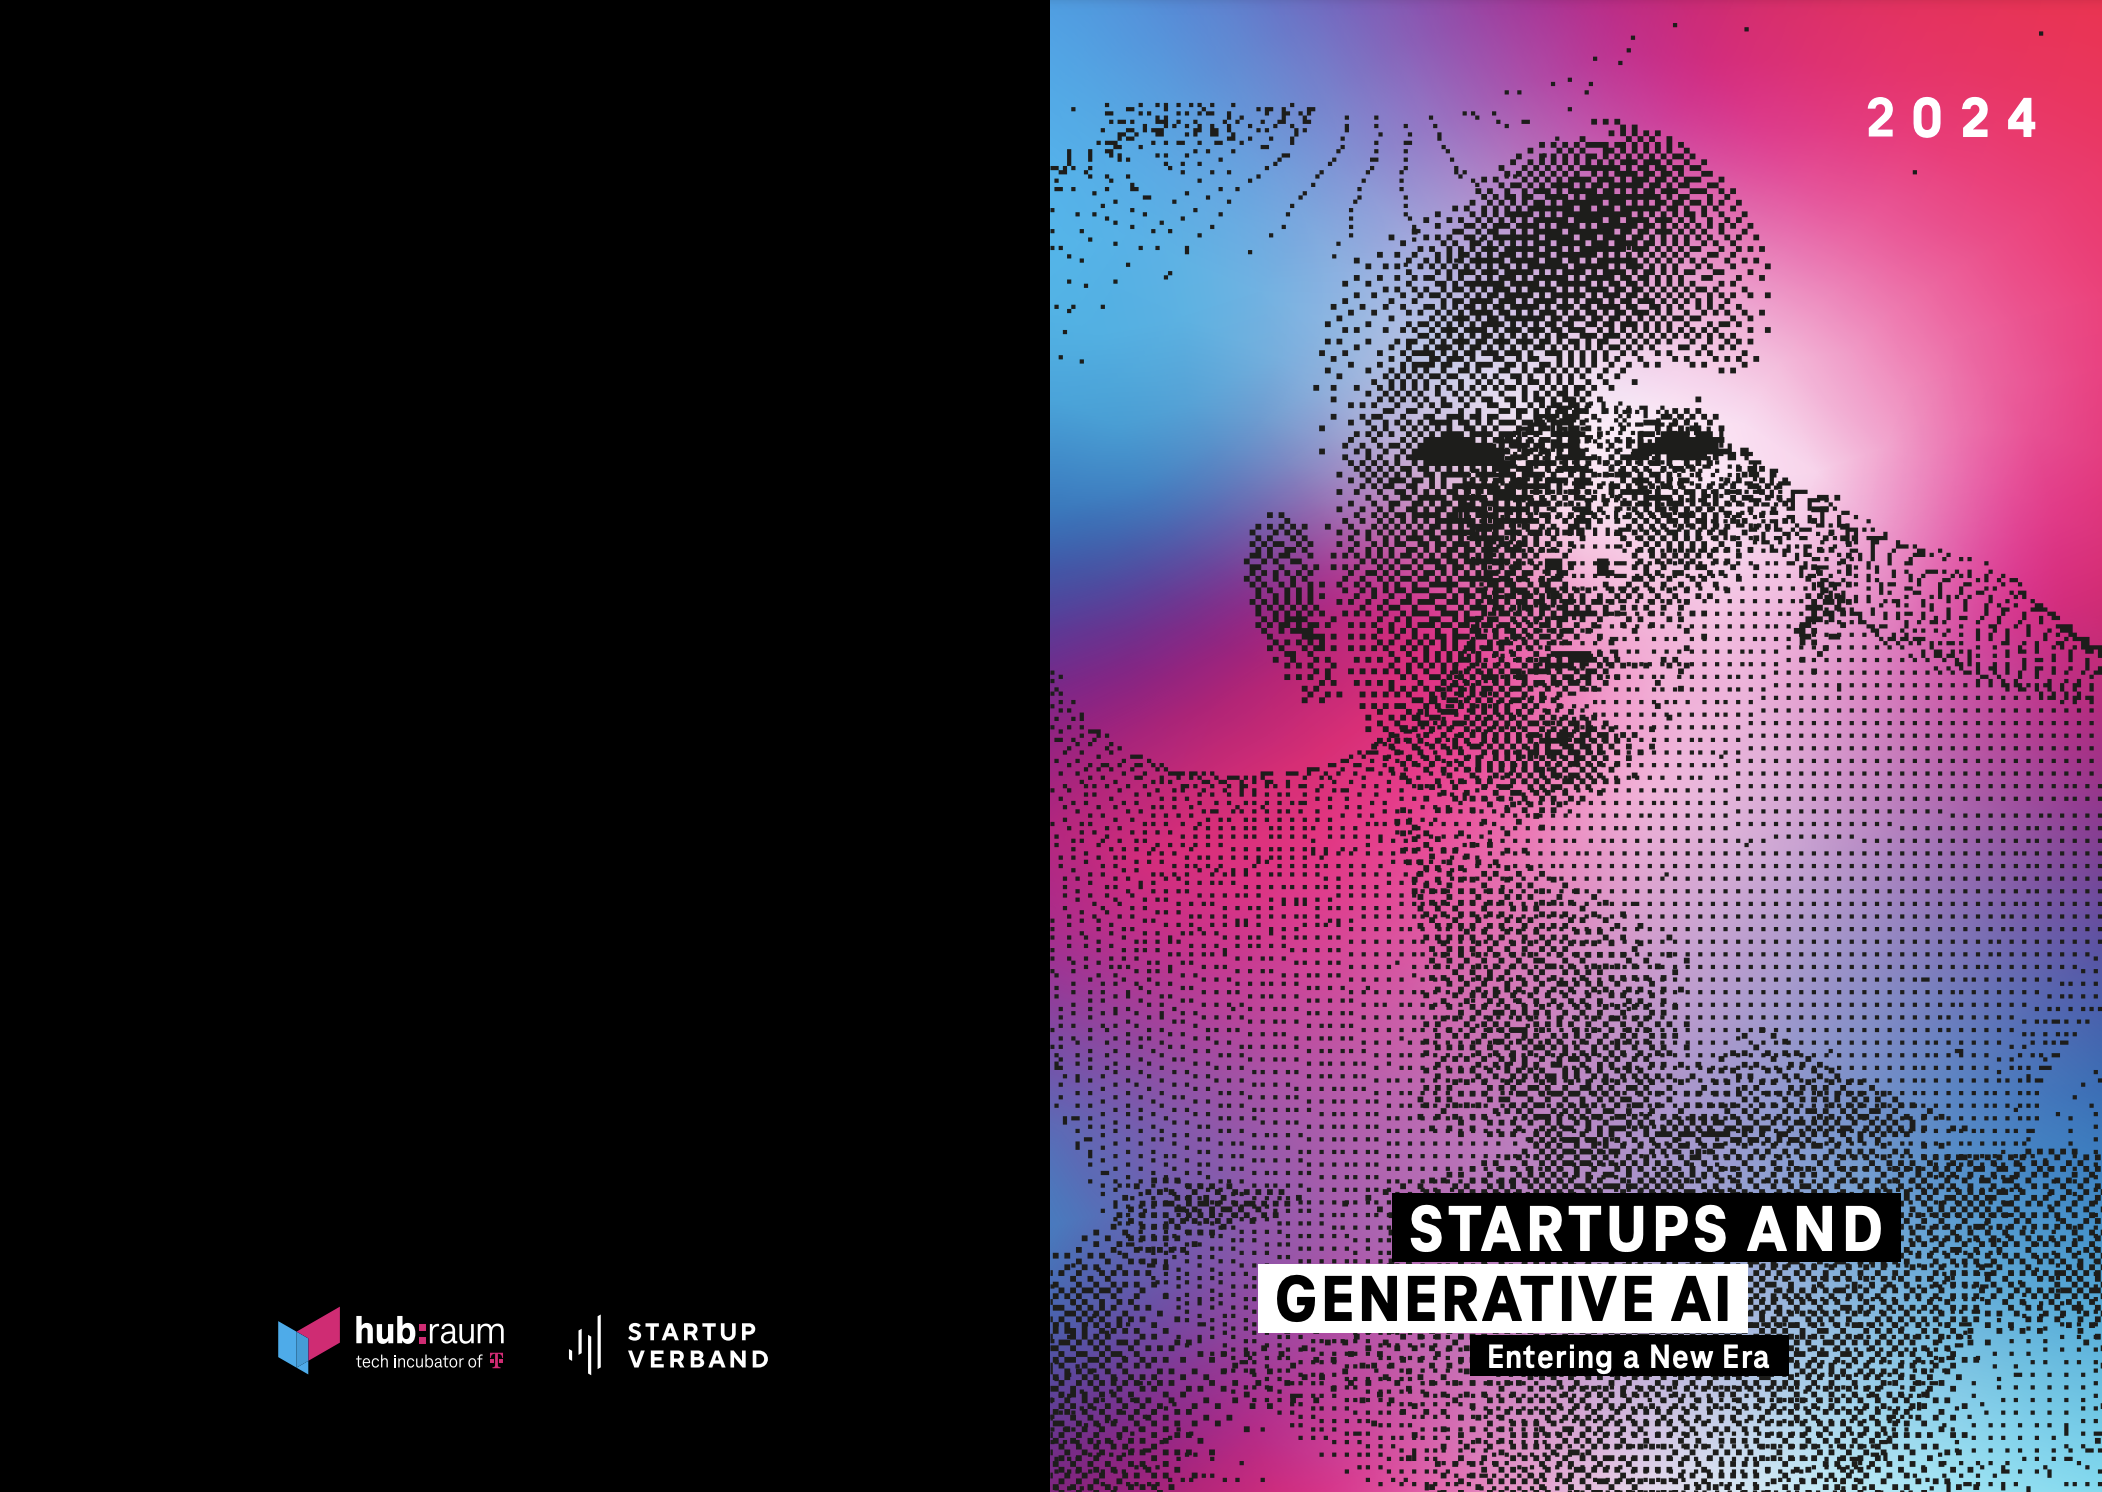 Startups and Generative AI 2024